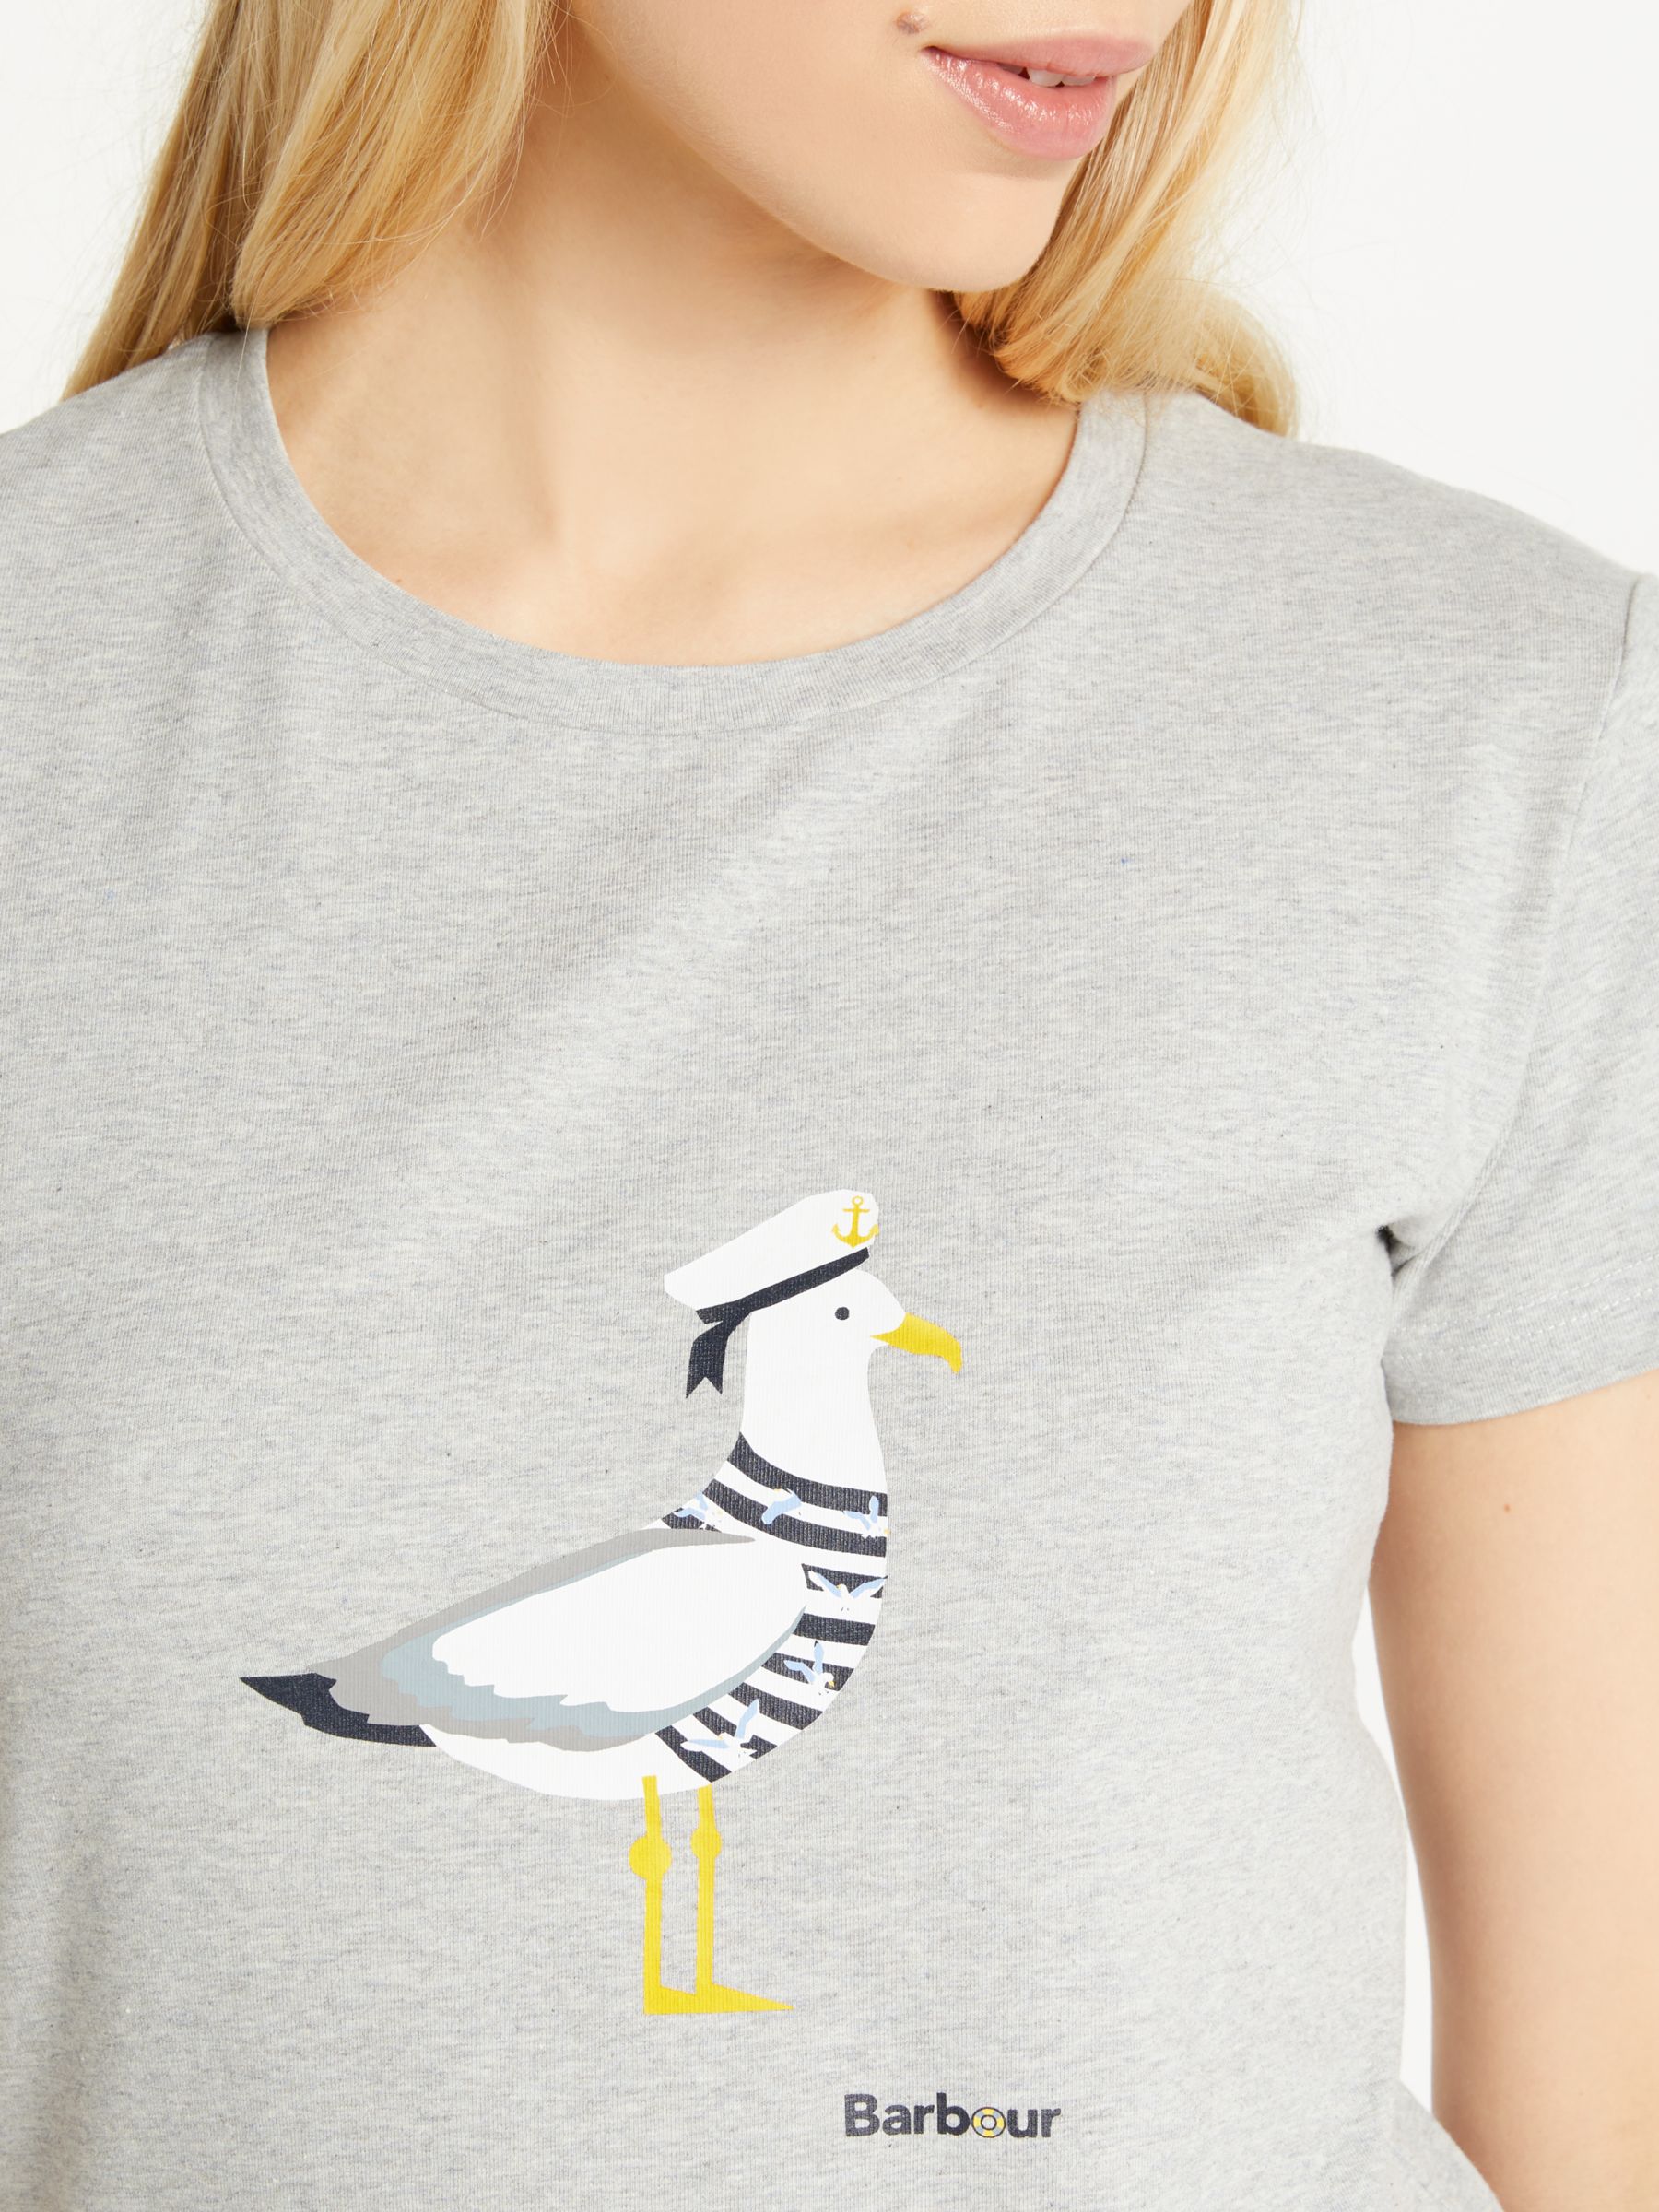 Barbour Rural Seagull Print T-Shirt 